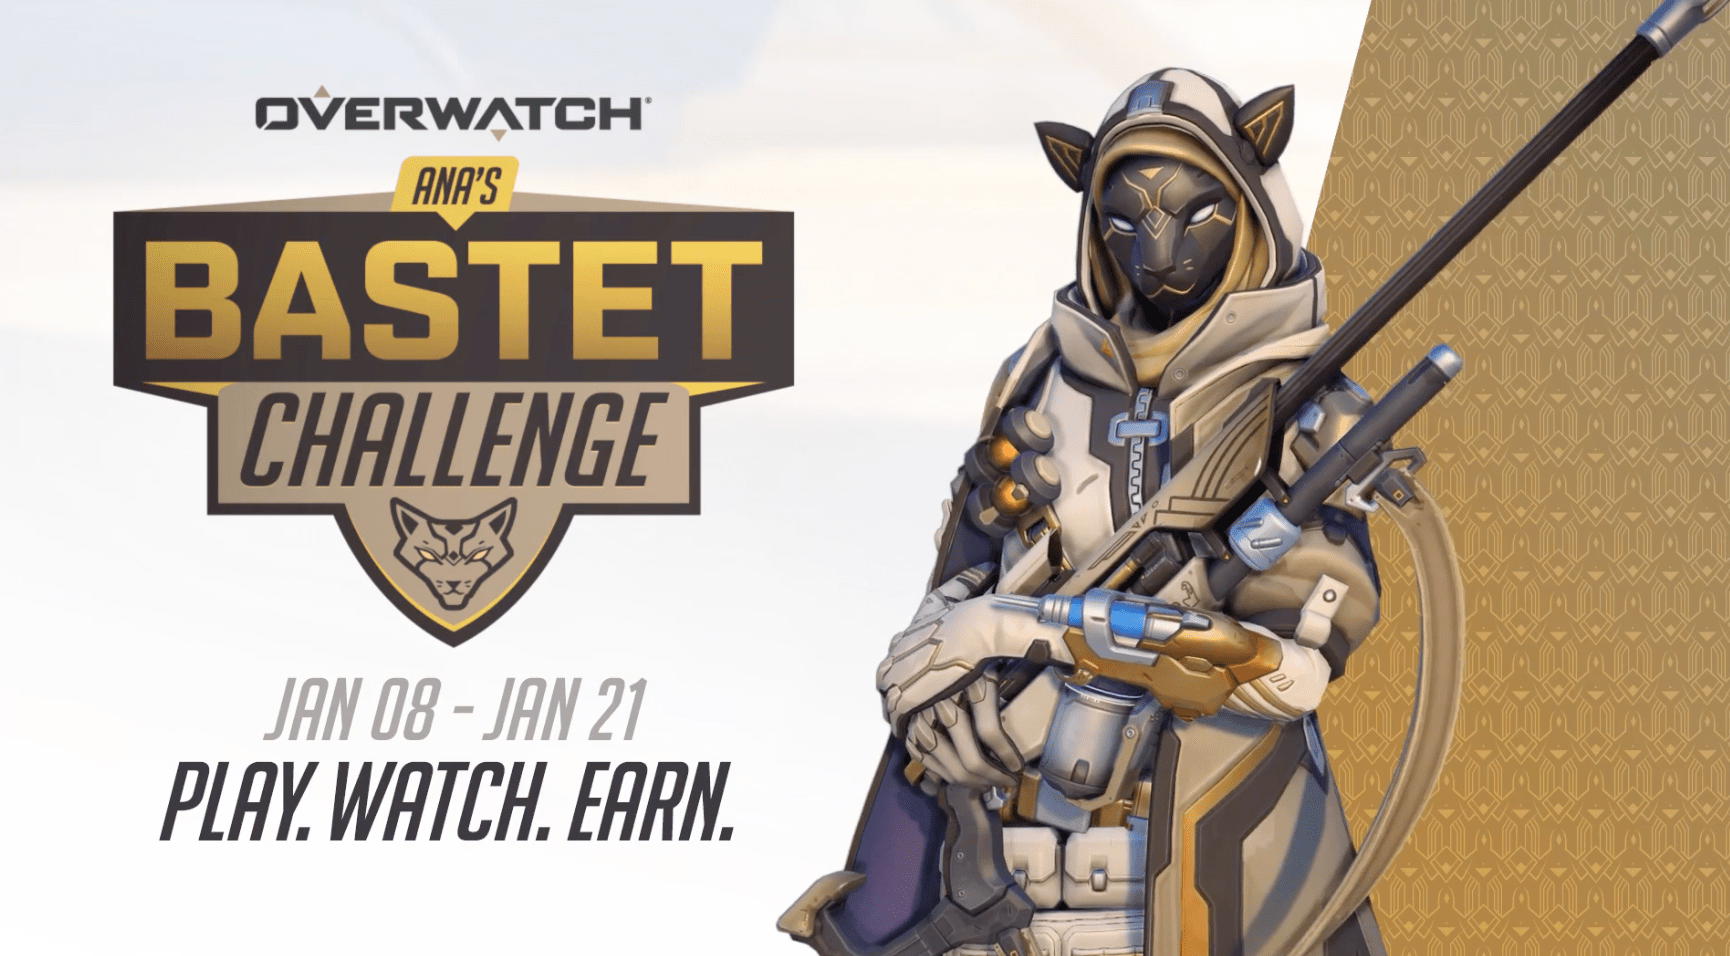 Overwatch announces Ana's Bastet Challenge